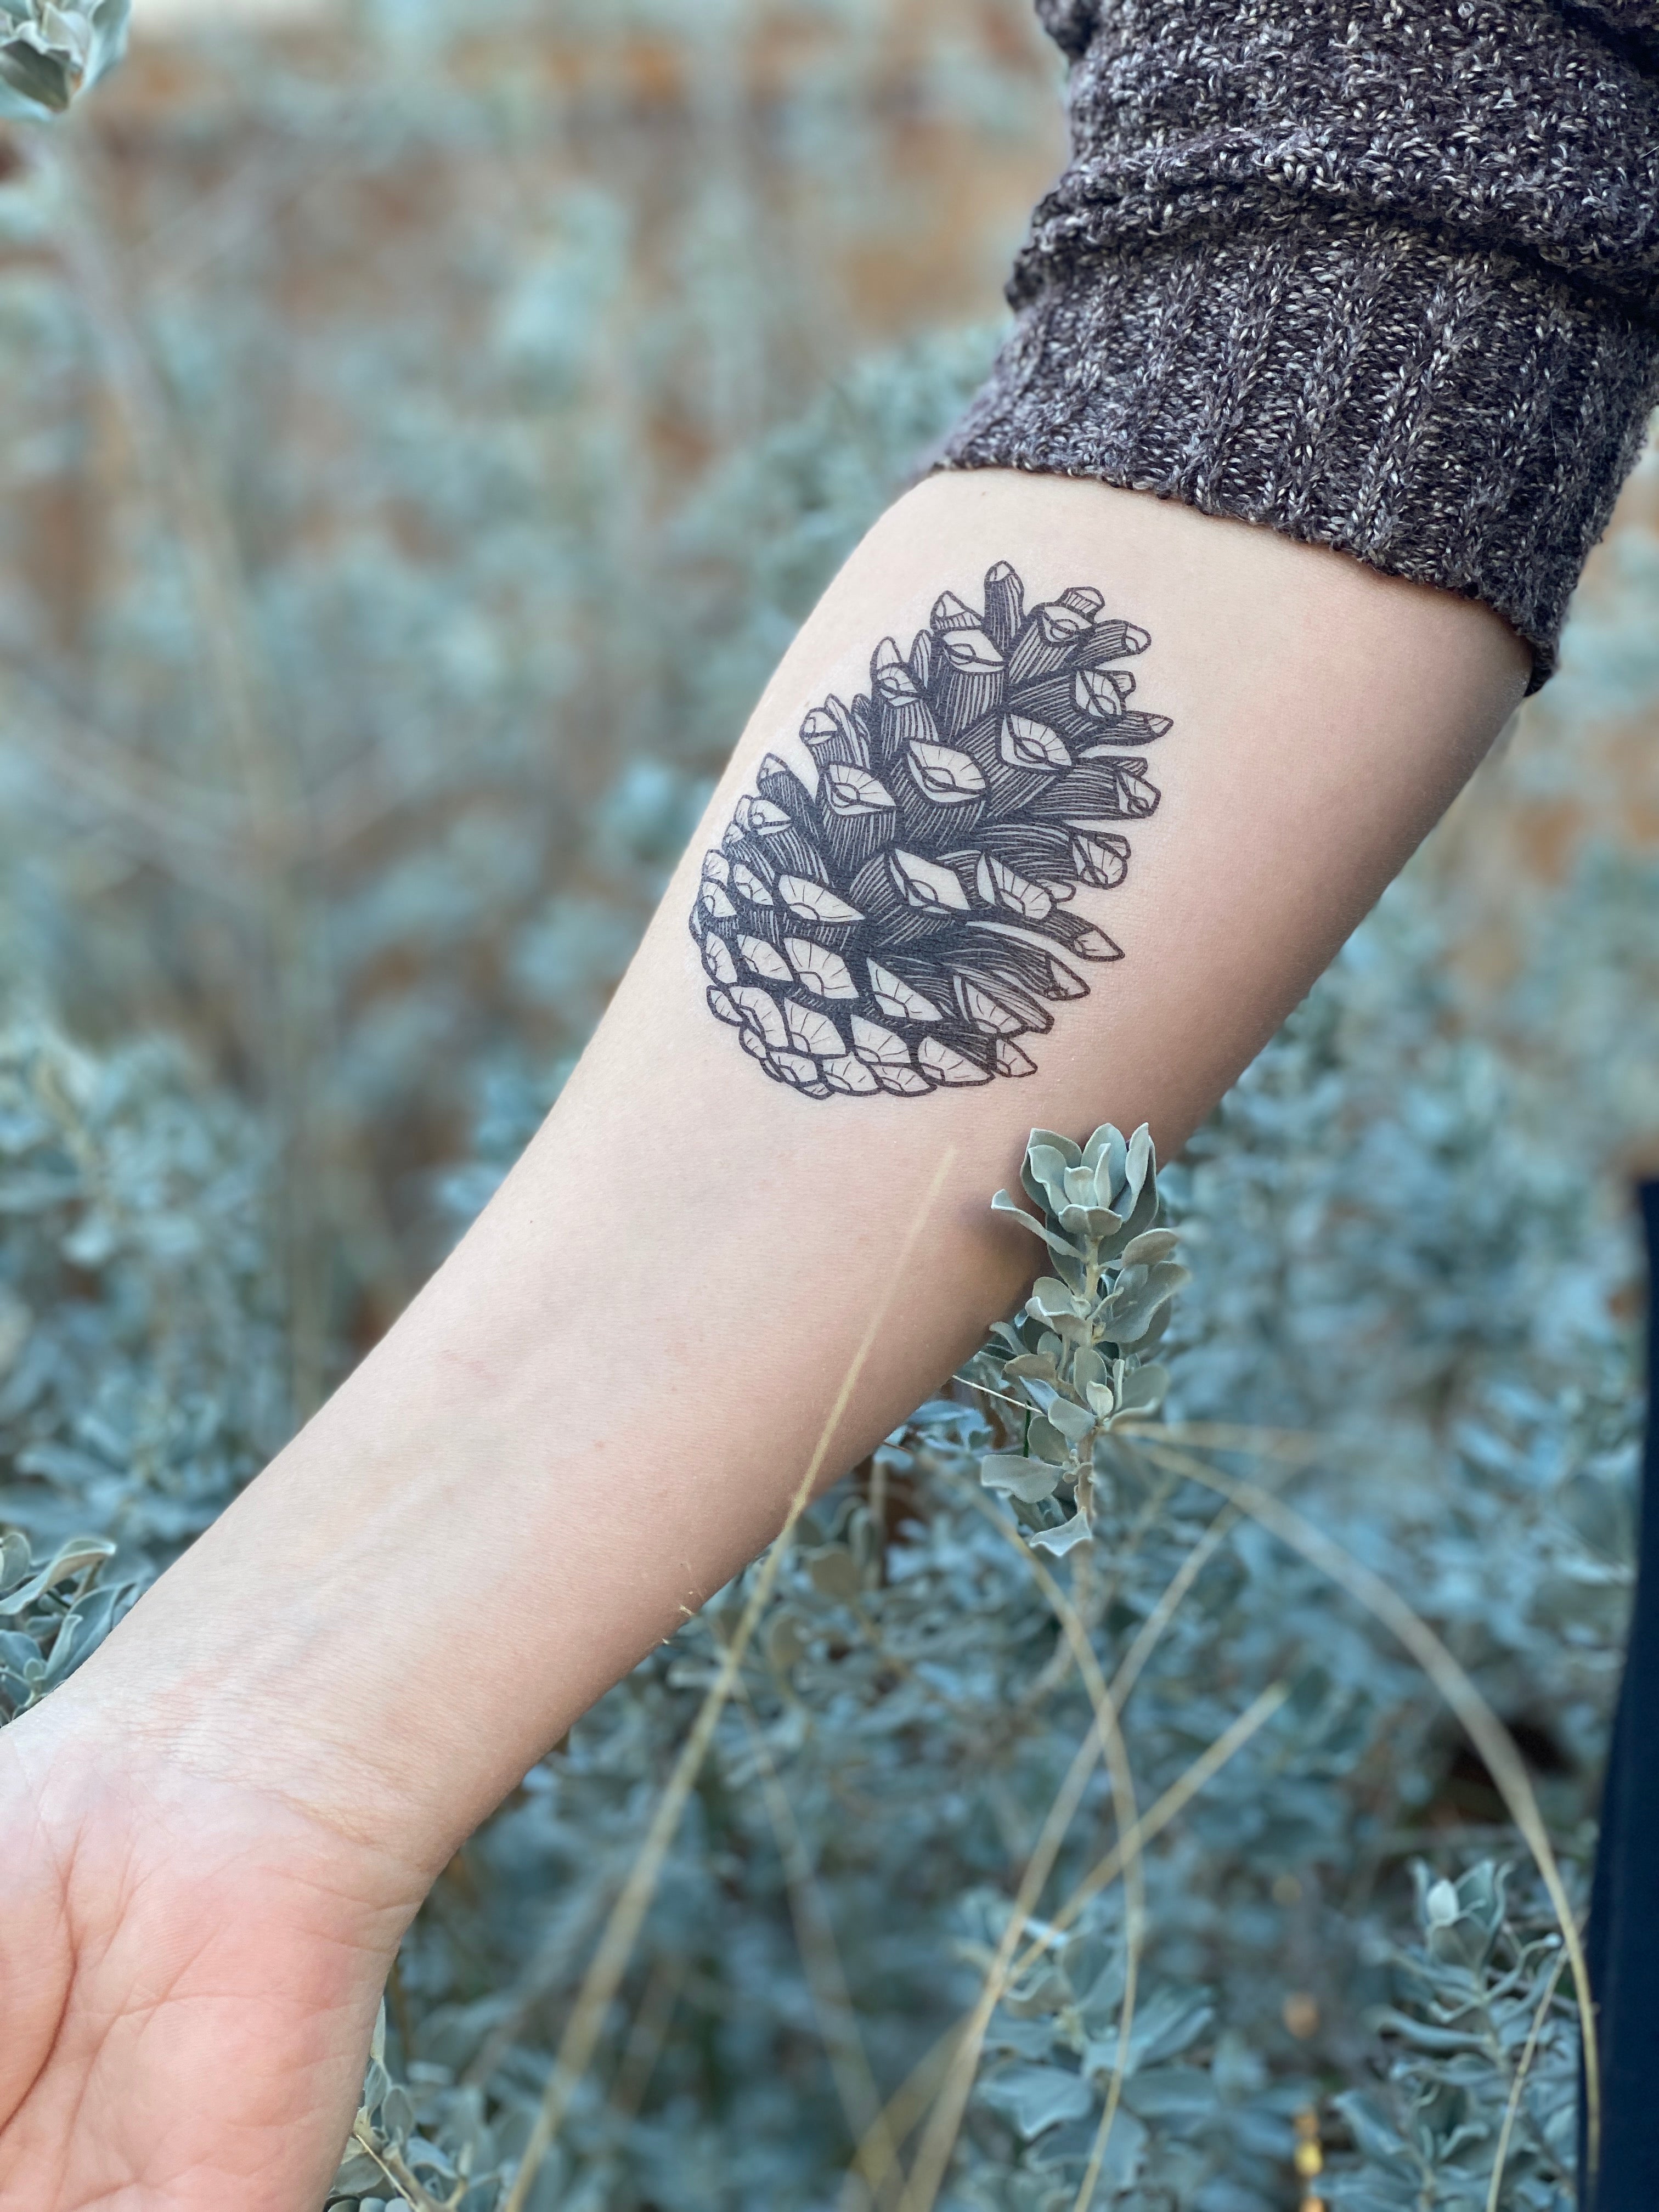 Pinecone tattoo by solarkei on DeviantArt